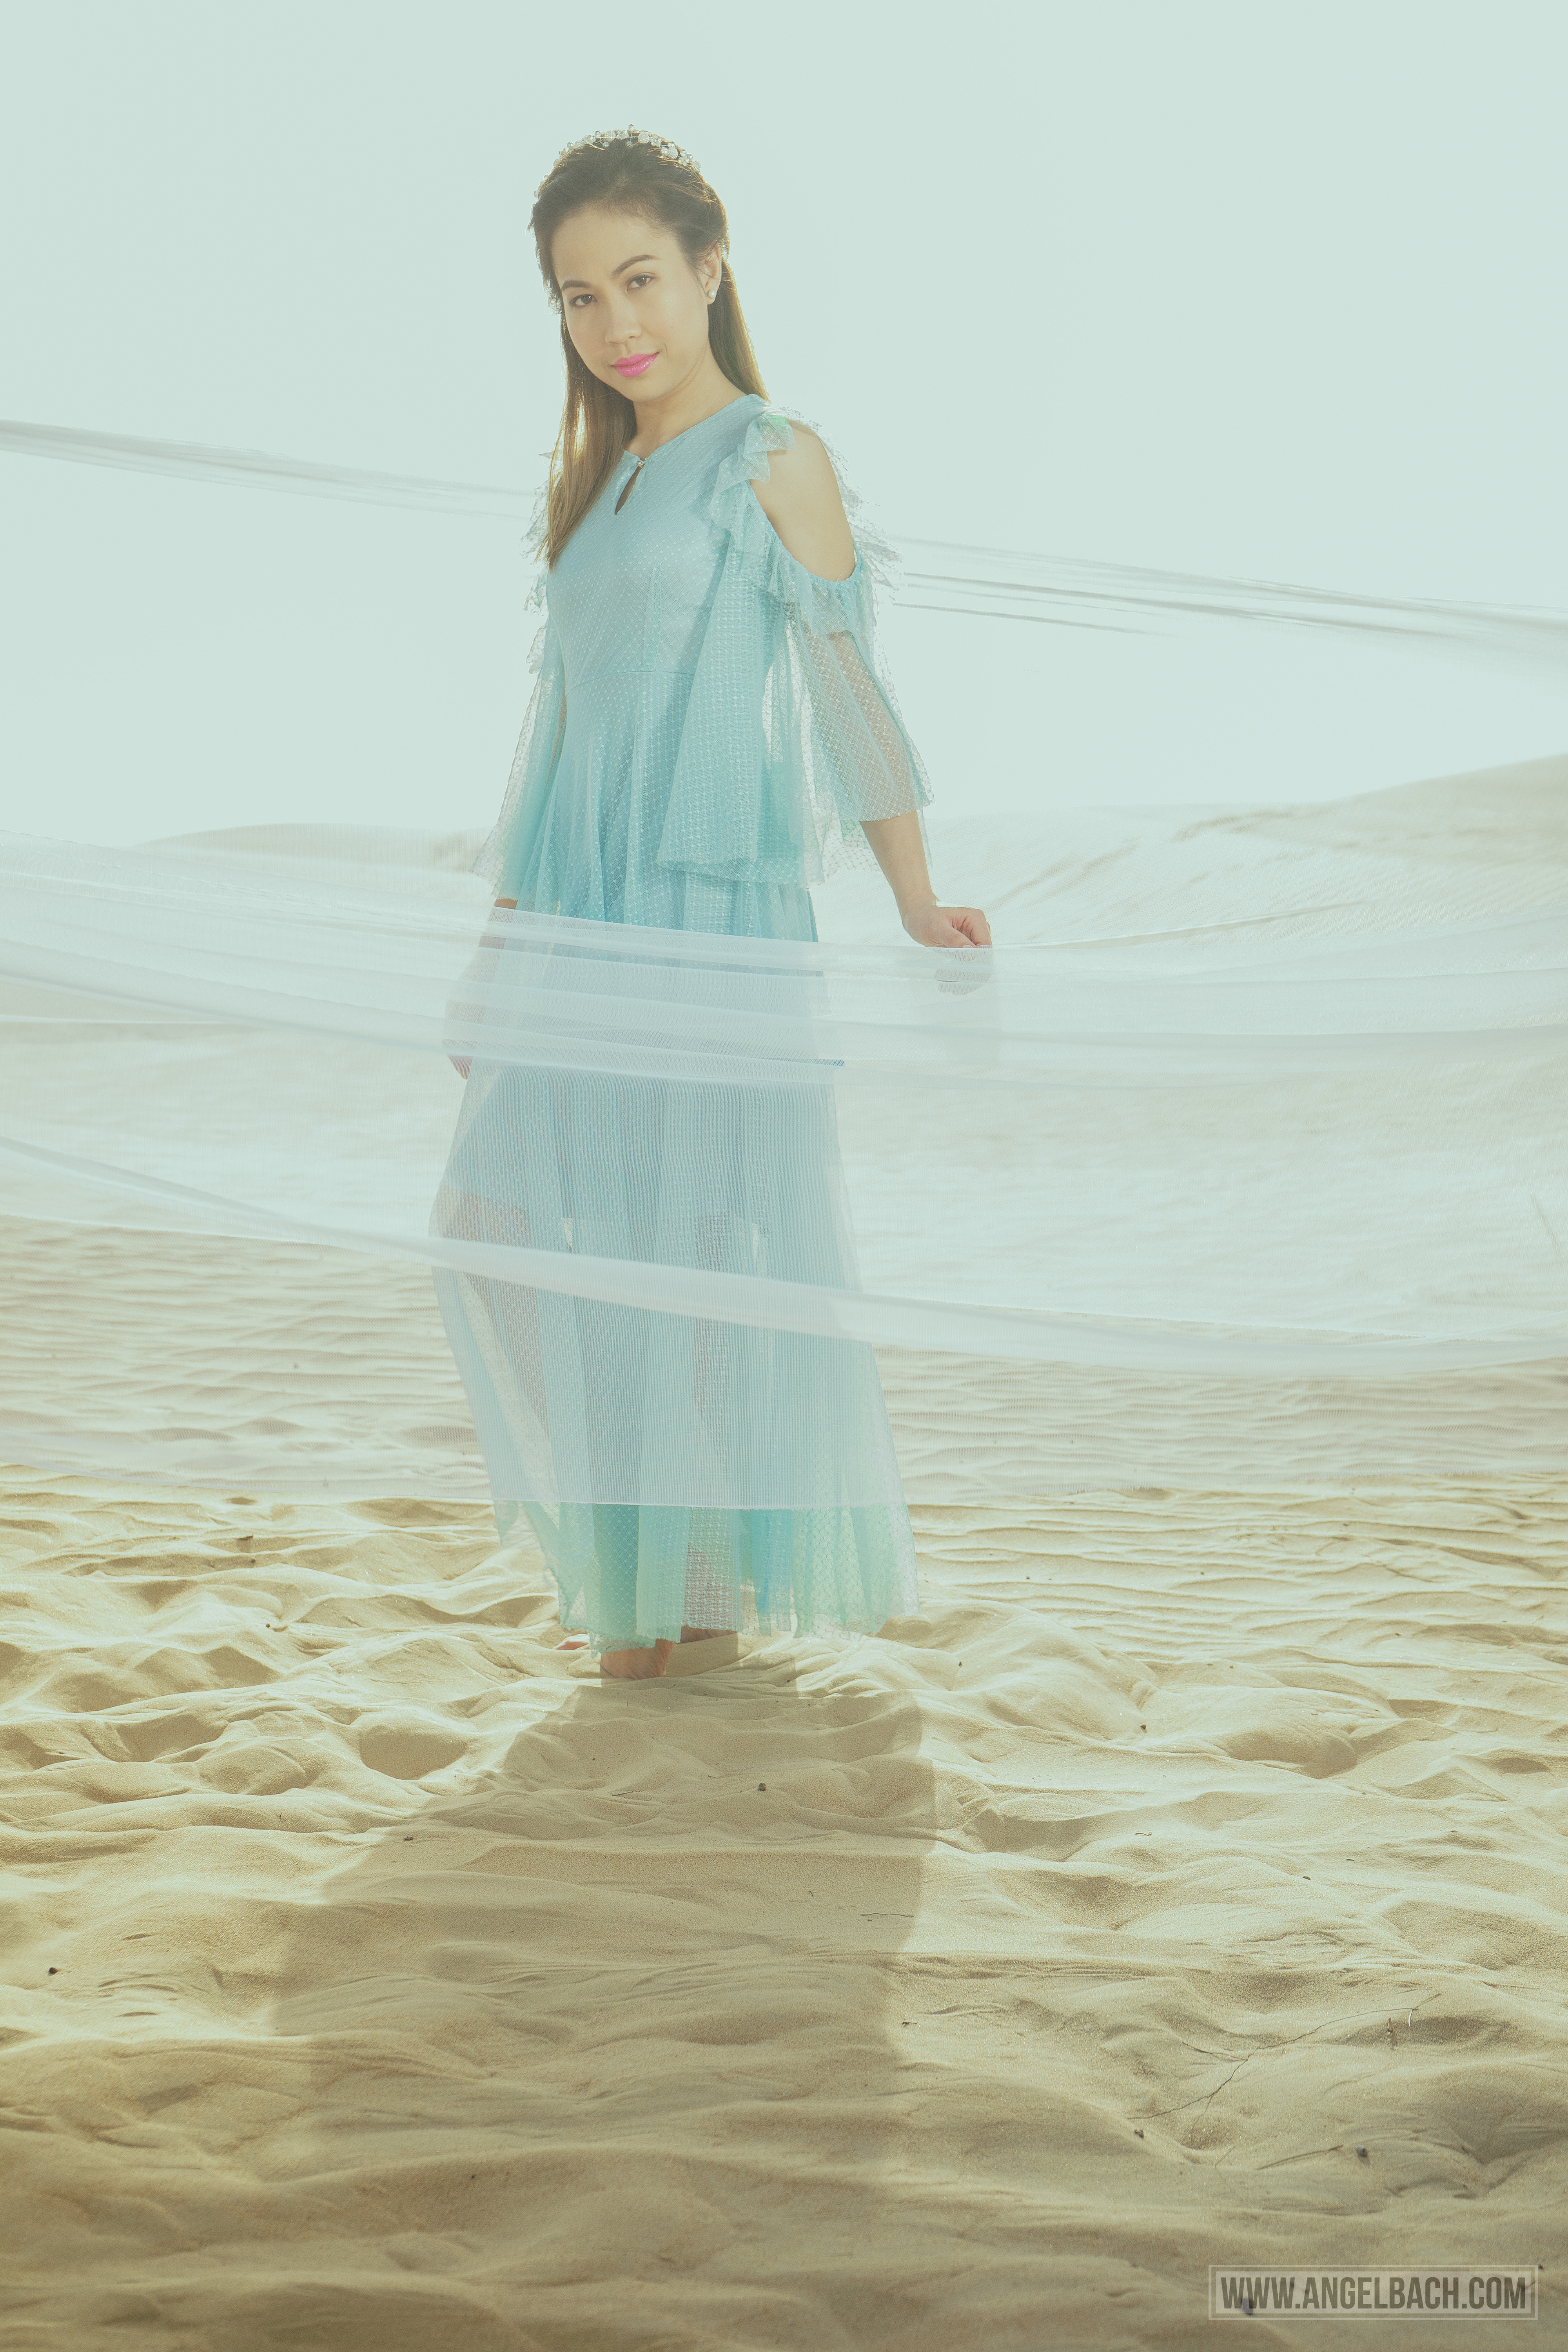 Desert, Dubai, Fashion Photography, Woman in Desert, Dubai Expat, Portraits, Pinay, Filipina, Muse, Gandang Pinay, Makeup and Style by Angel Bach, Photography by Angel Bach